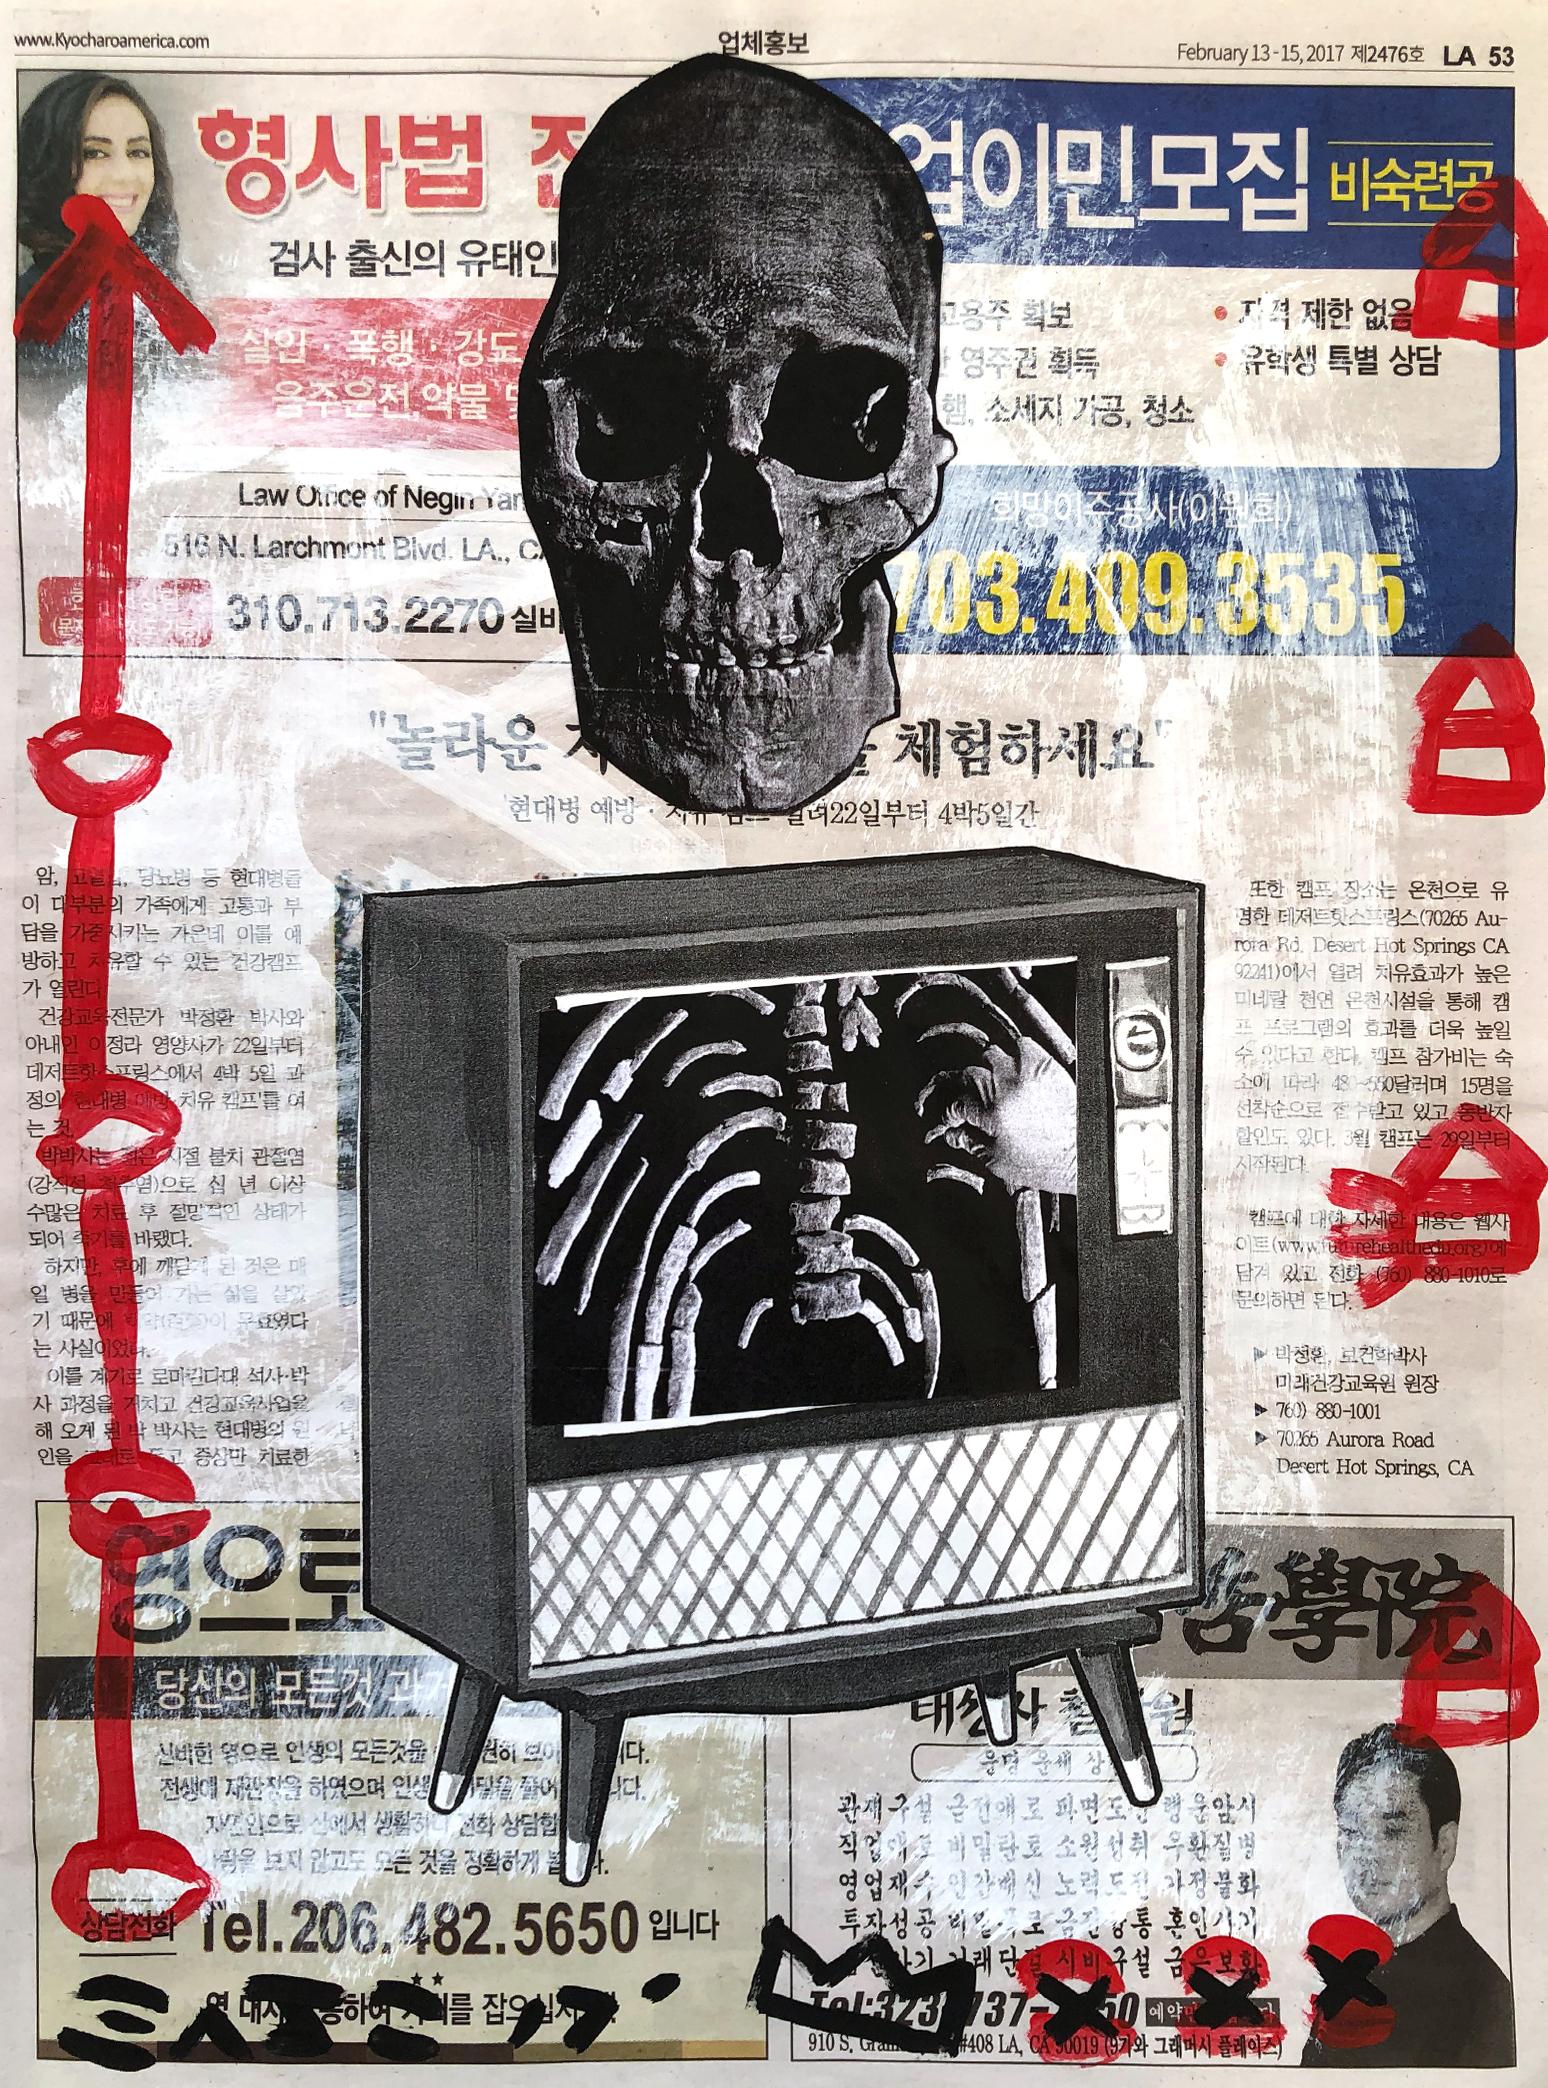 The Fourteenth Season of Bones - Retro TV Urban Contemporary Pop Street Art - Mixed Media Art by Gary John